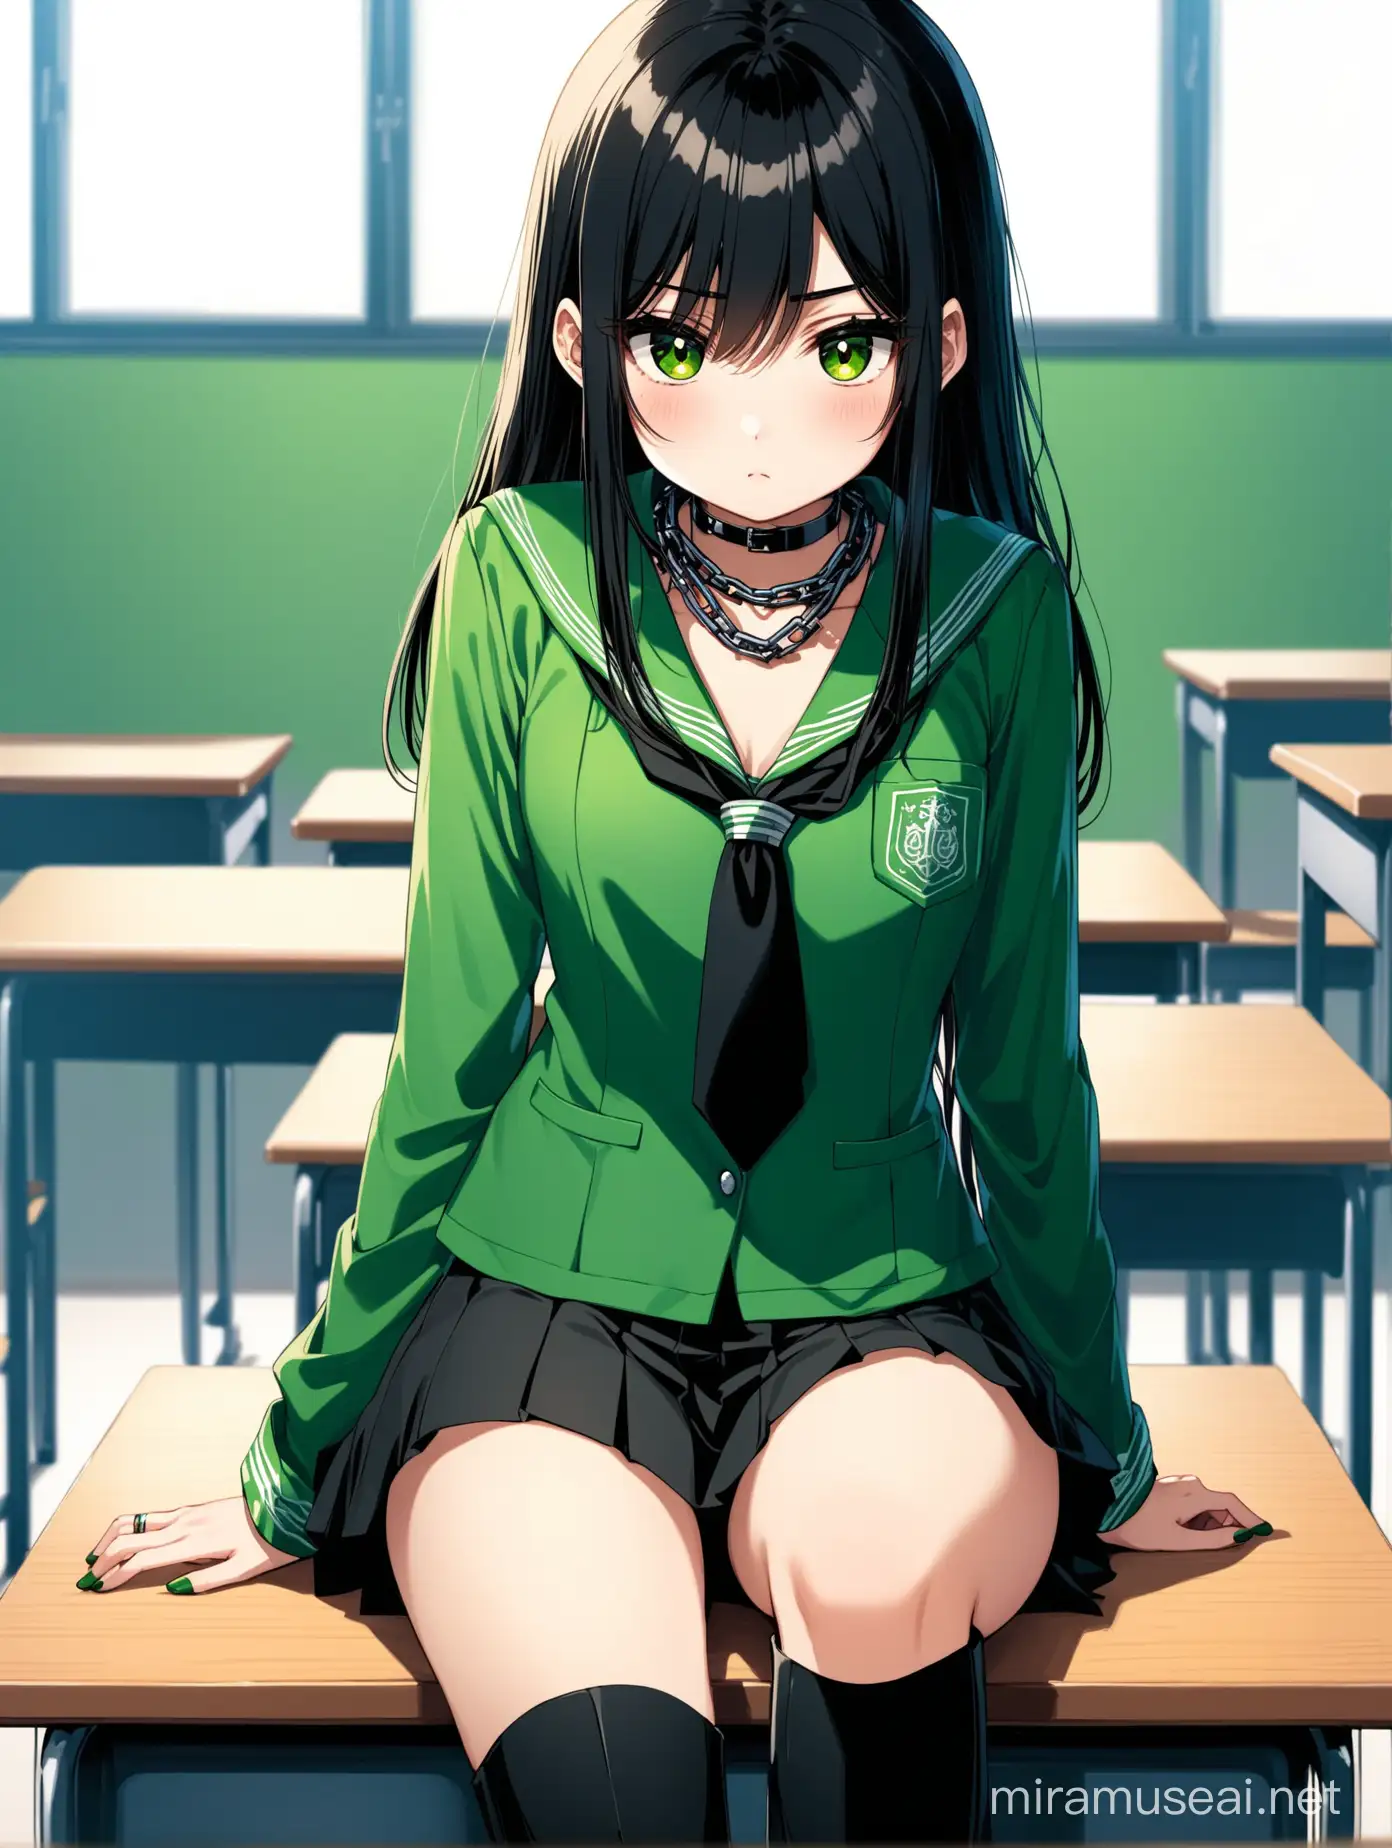 Mysterious Teenage Girl in Green School Uniform Sitting in Classroom